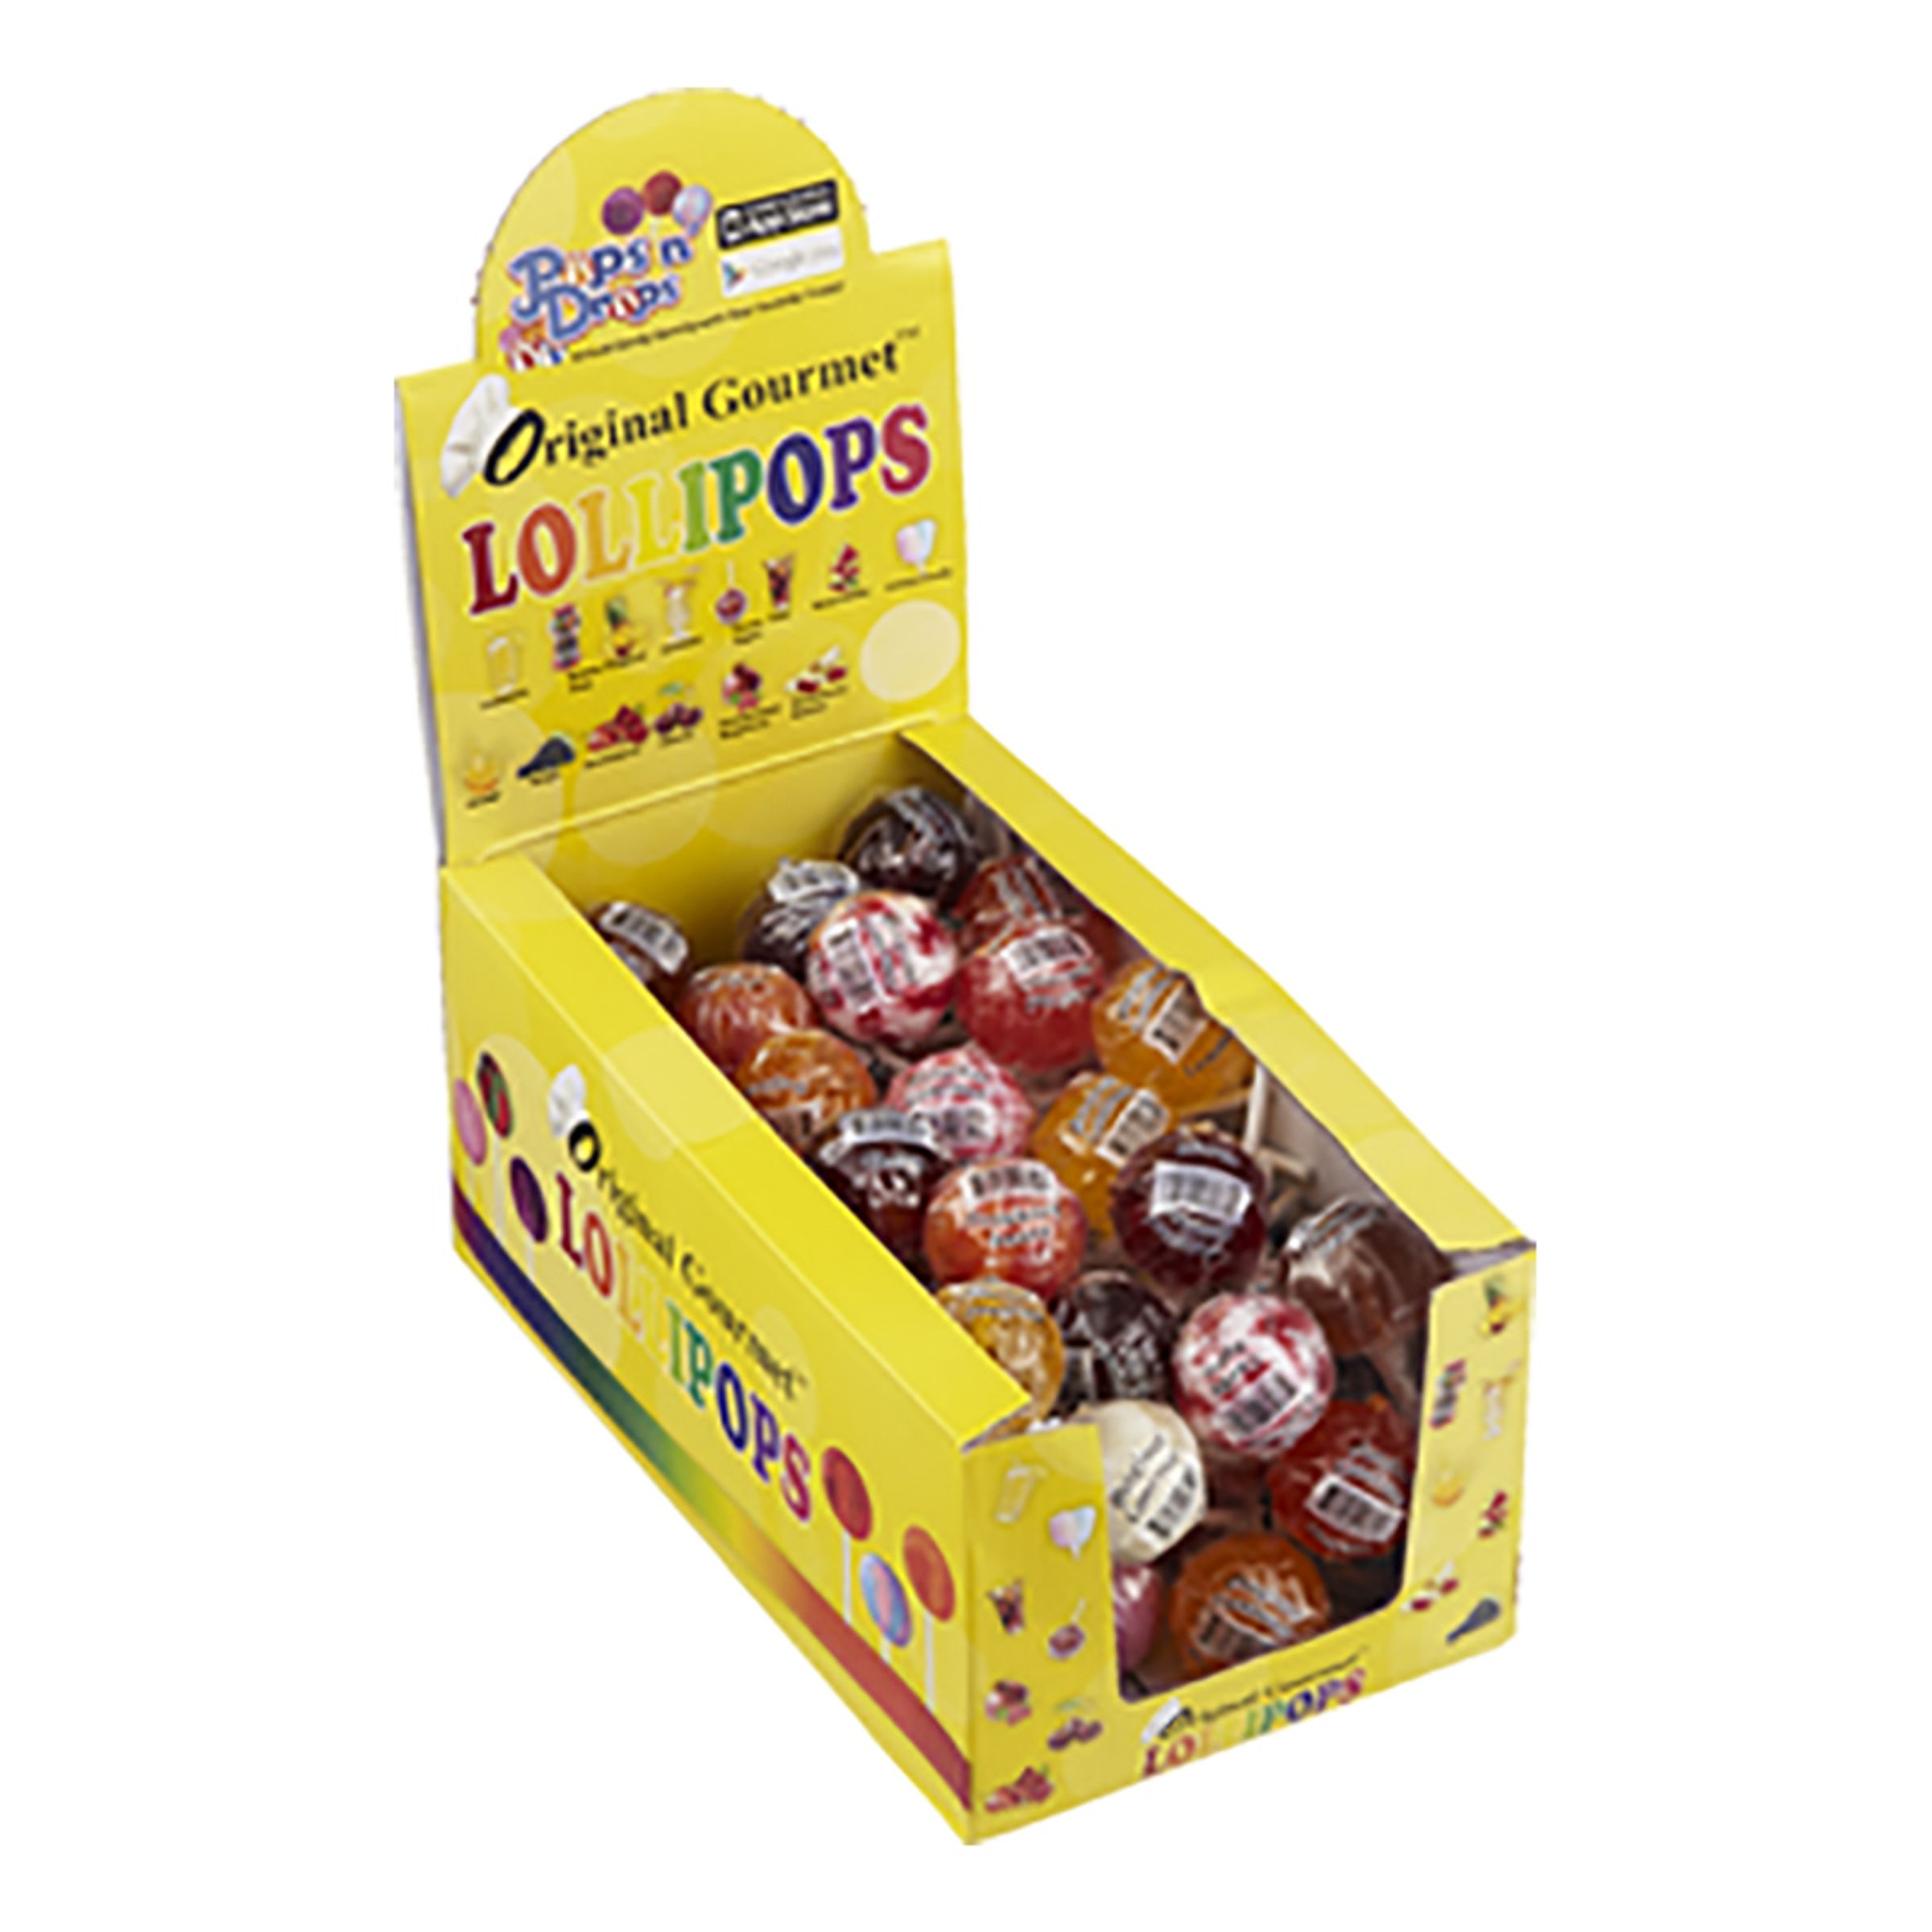 Original Gourmet Lollipops - 1-pack